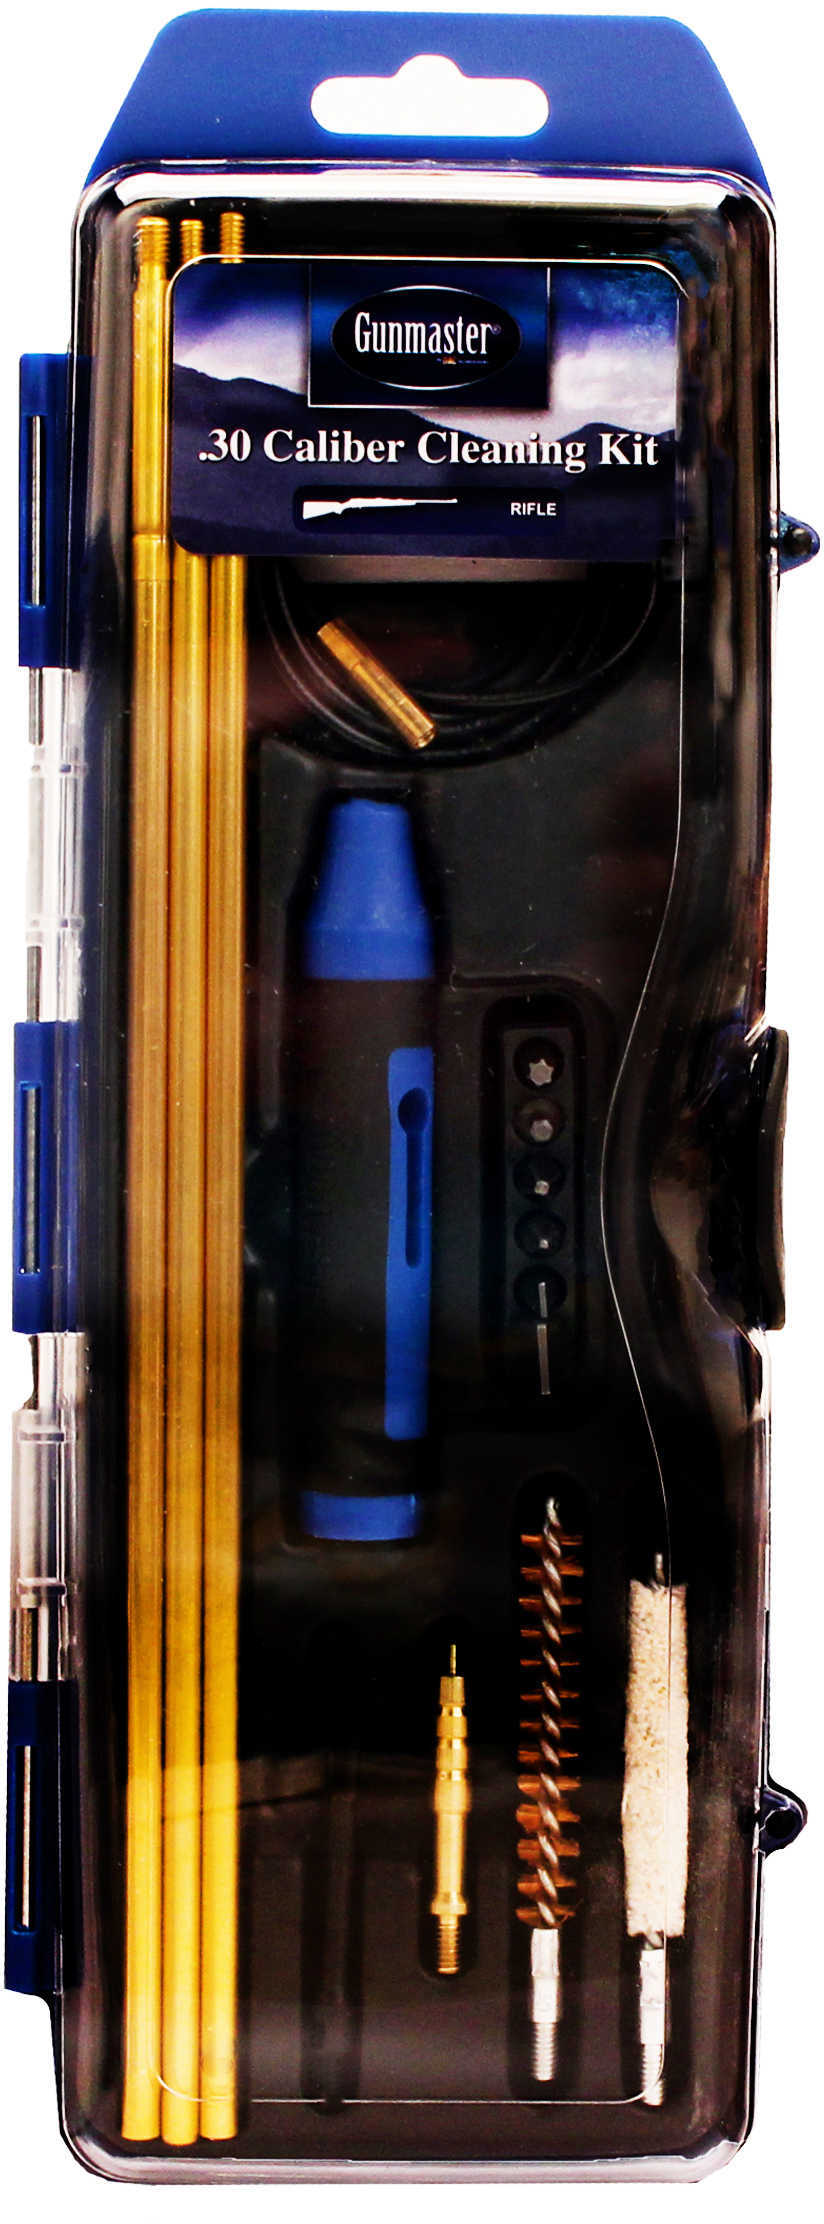 Gunmaster Hybrid Cleaning Kit .30 Caliber 16 pc.